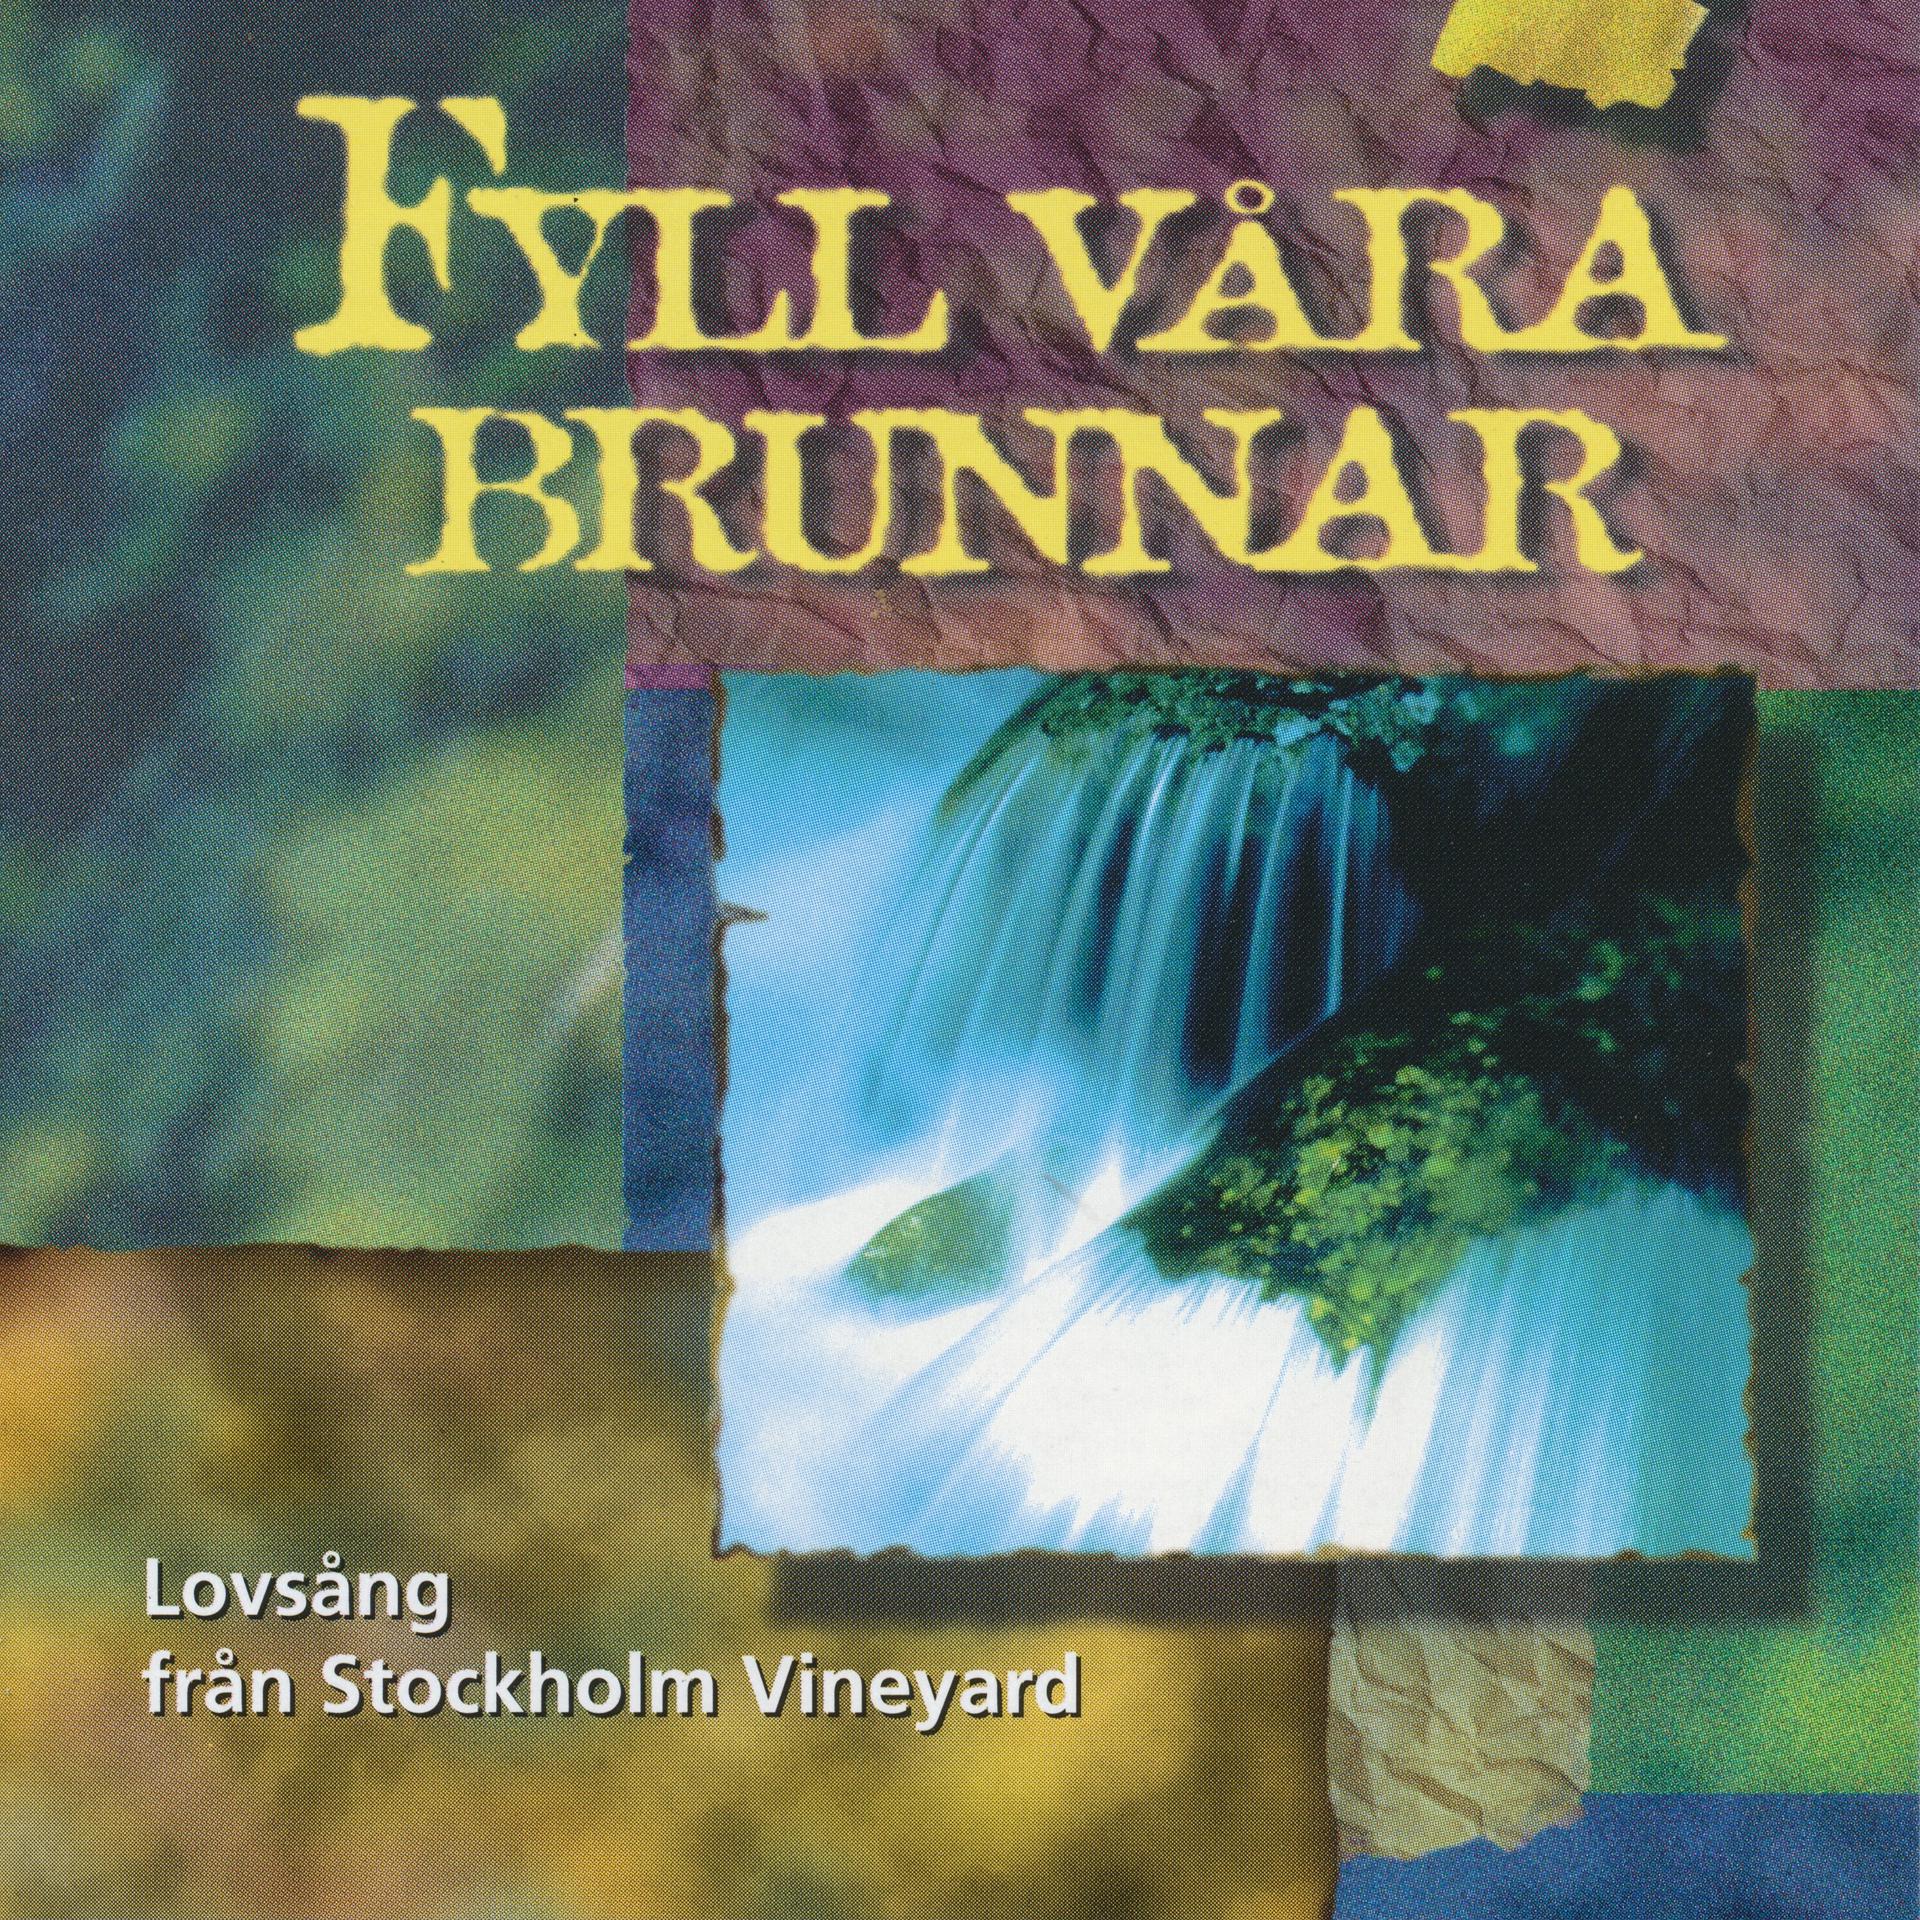 Постер альбома Fyll våra brunnar